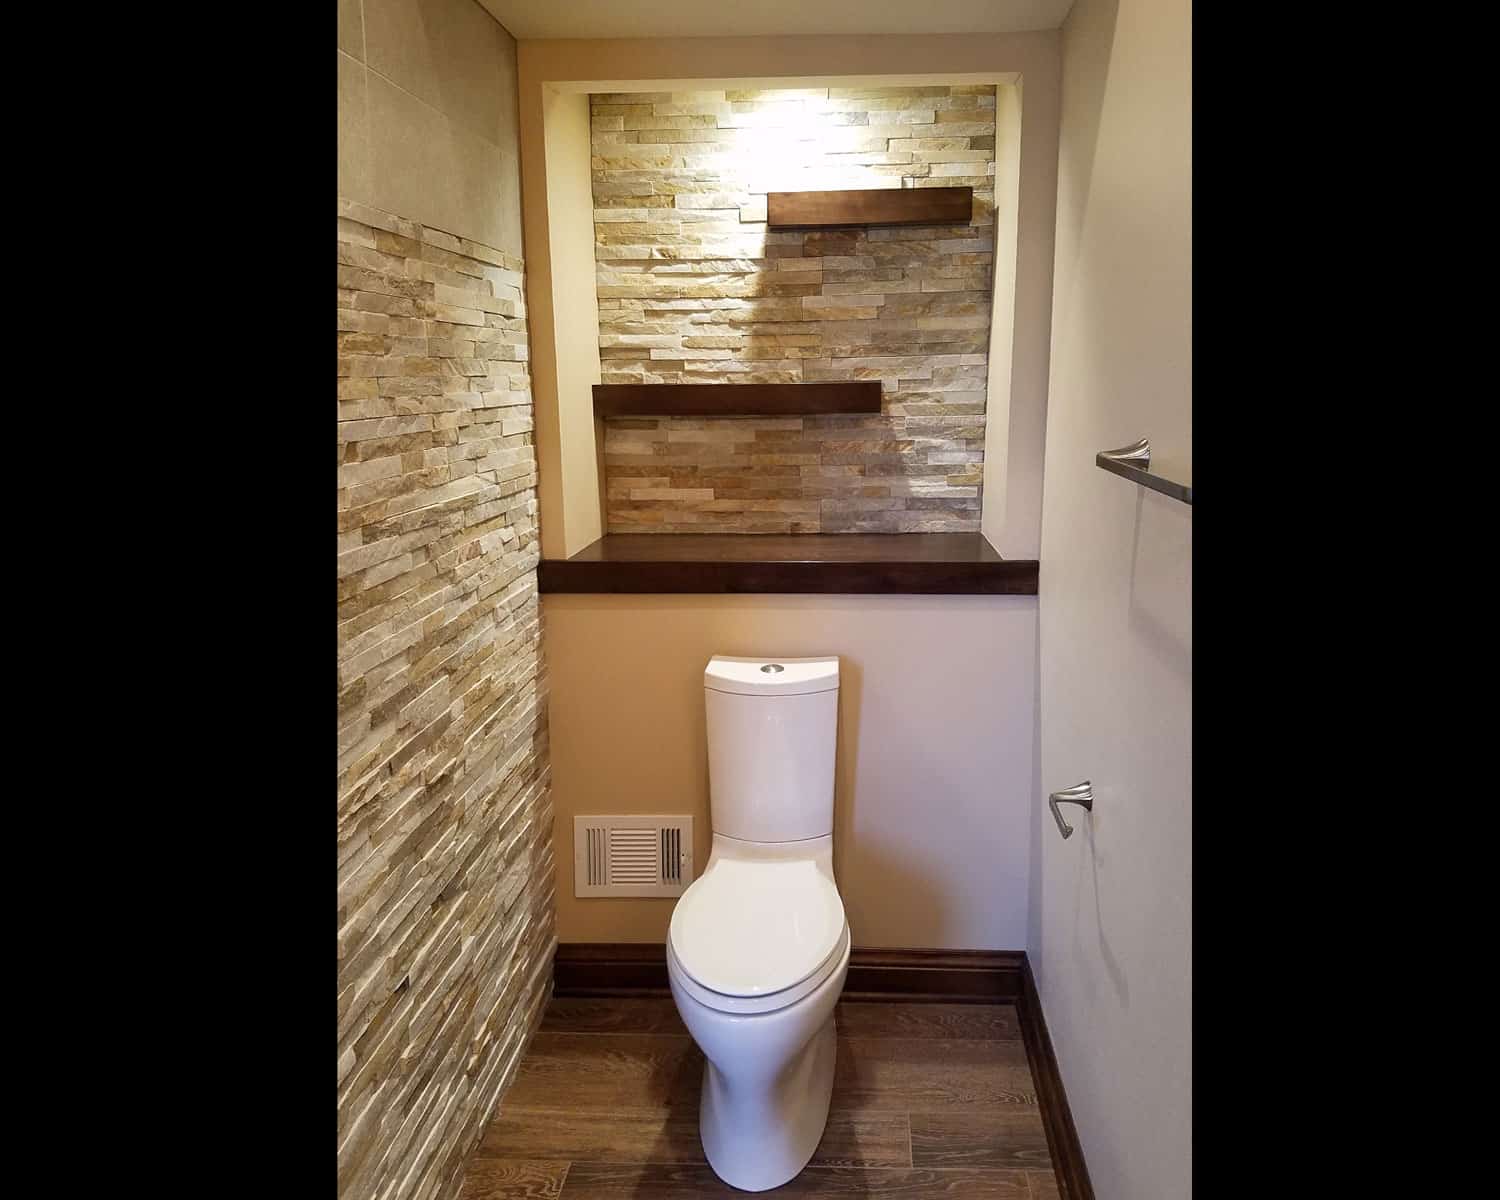 Lemel Homes Remodeling - Bathroom - toilet and stonework detail